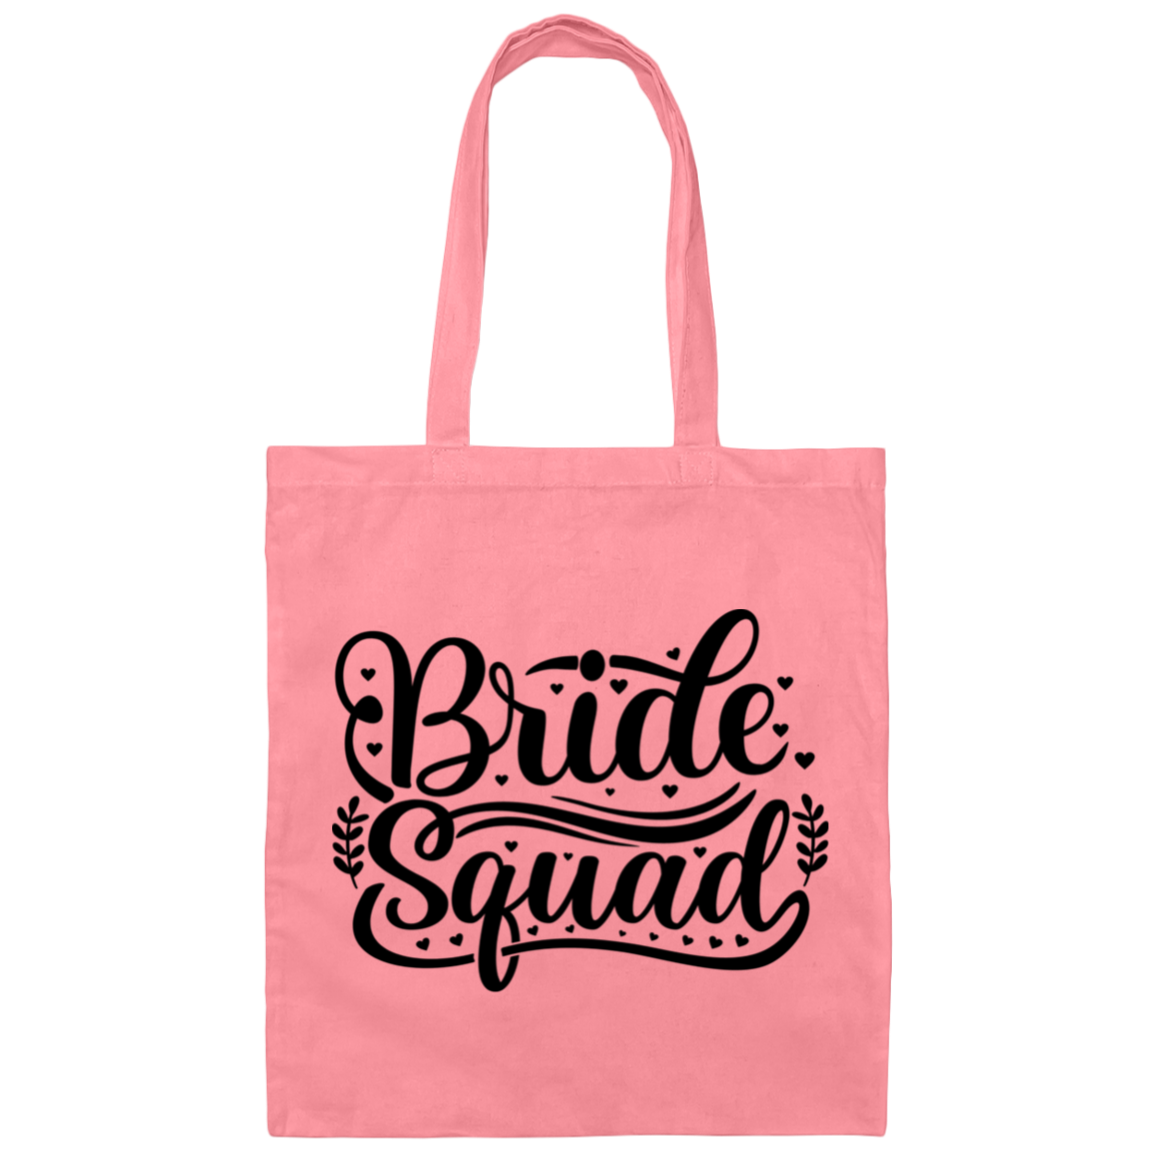 Bride Squad Canvas tote bag, Bridesmaid's Gift